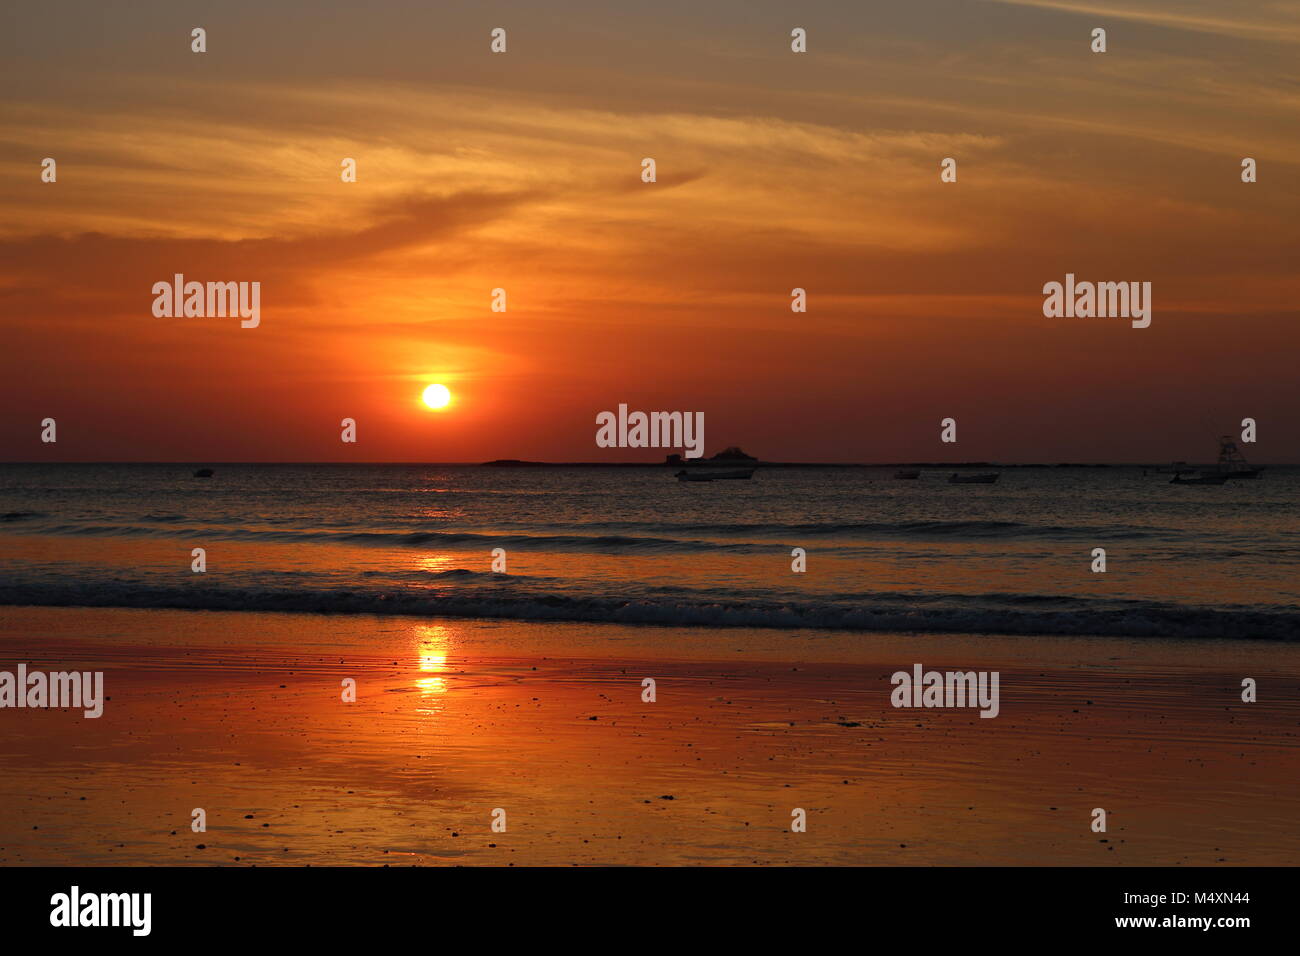 sunset in costa rica Stock Photo